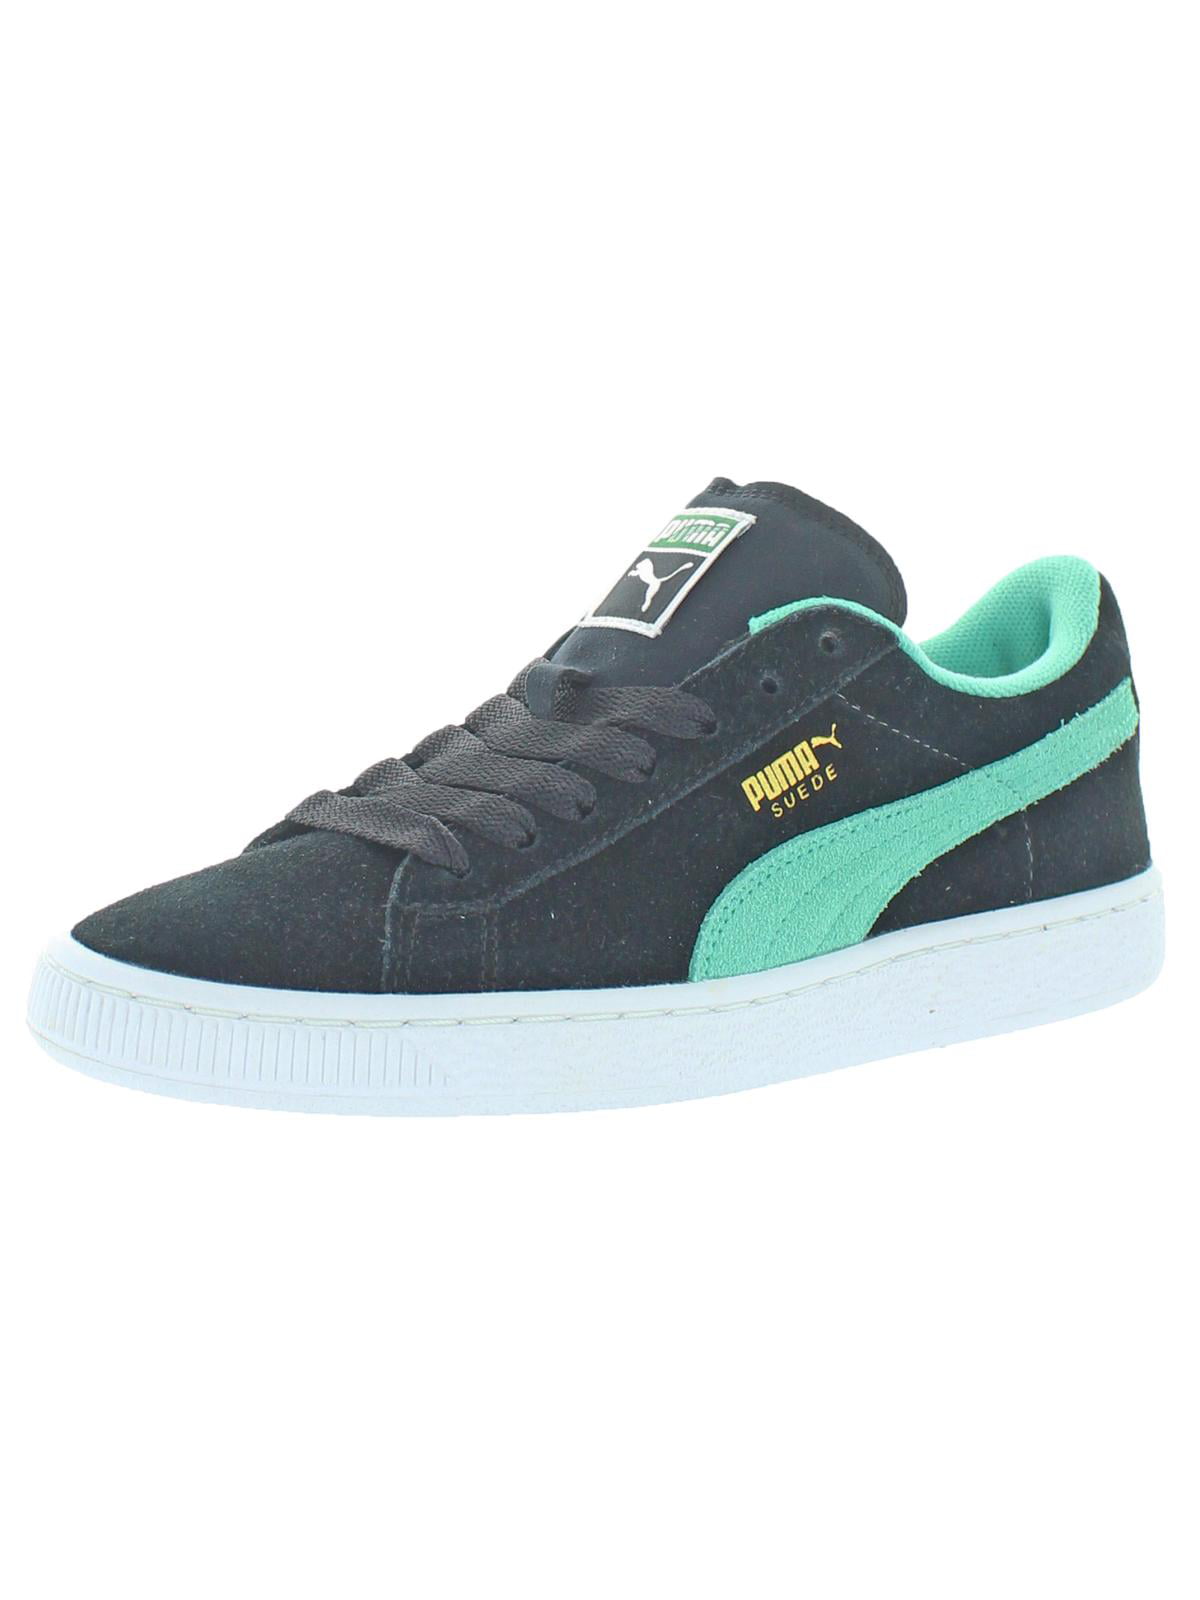 Puma Suede Jr Black / Green Team Gold Ankle-High Fashion Sneaker - 6M ...